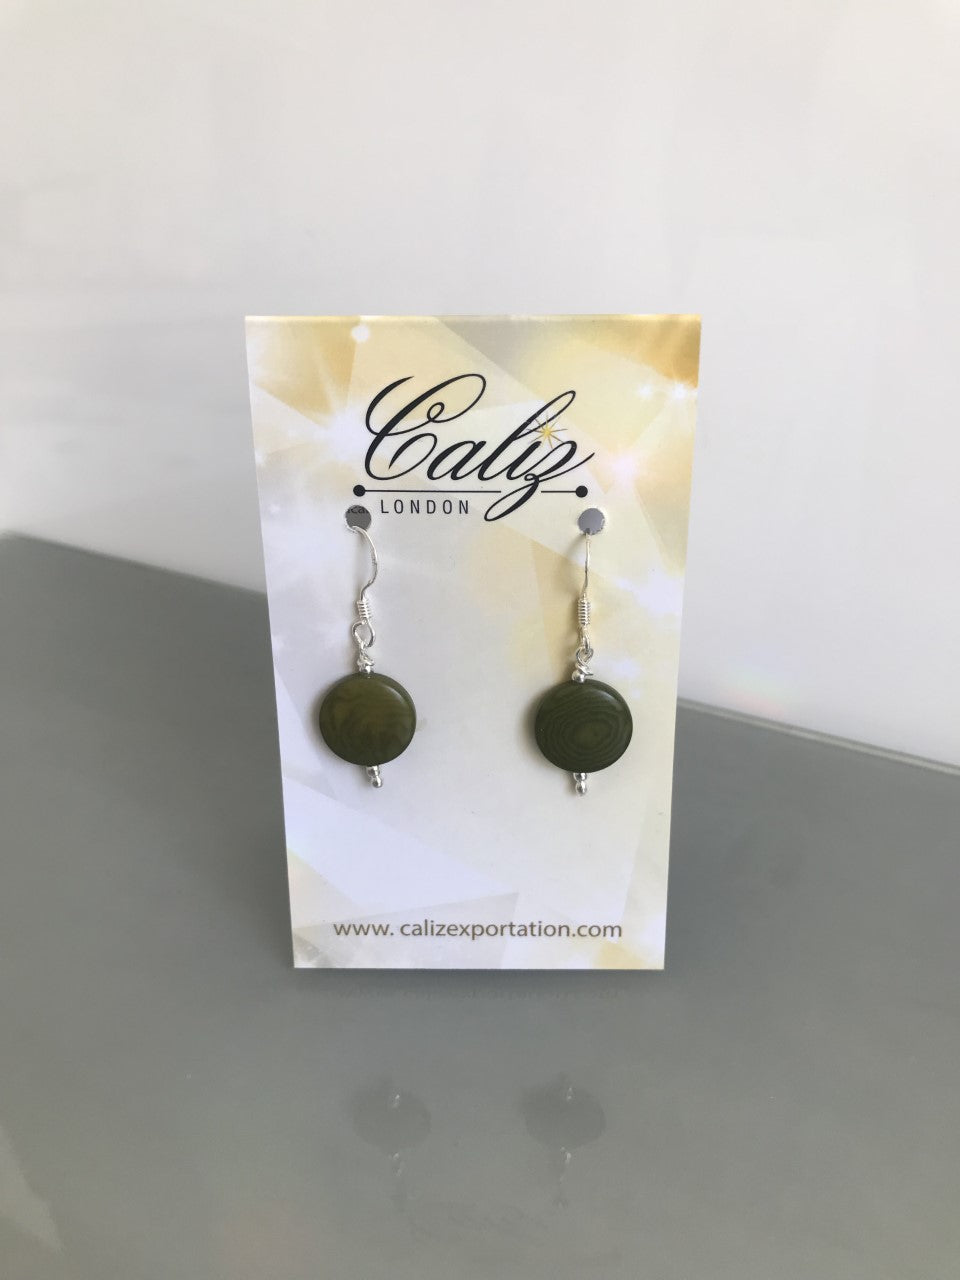 Andrea earrings - green olive